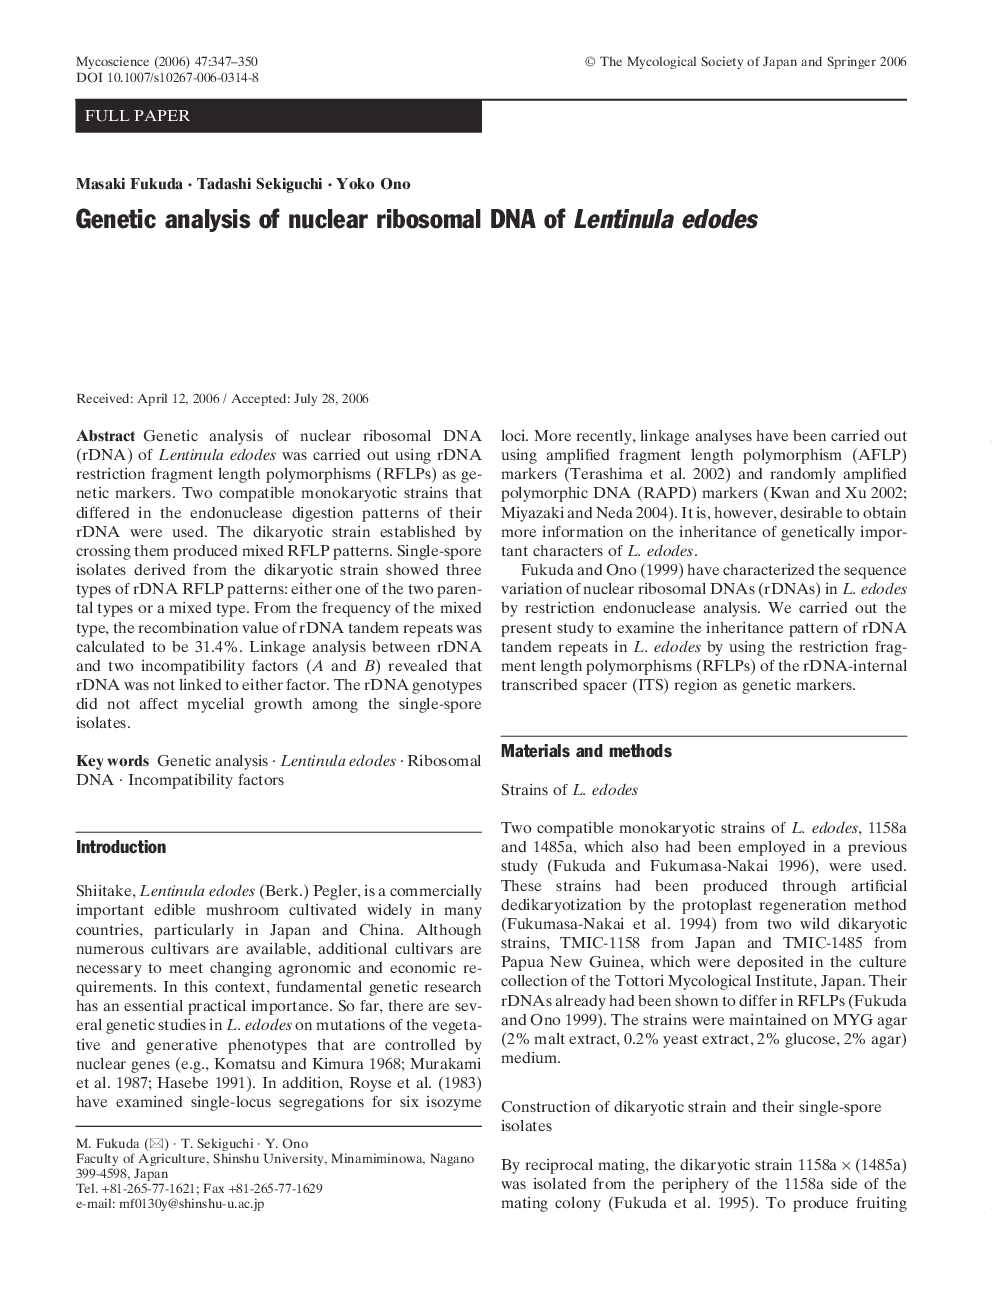 Genetic analysis of nuclear ribosomal DNA of Lentinula edodes